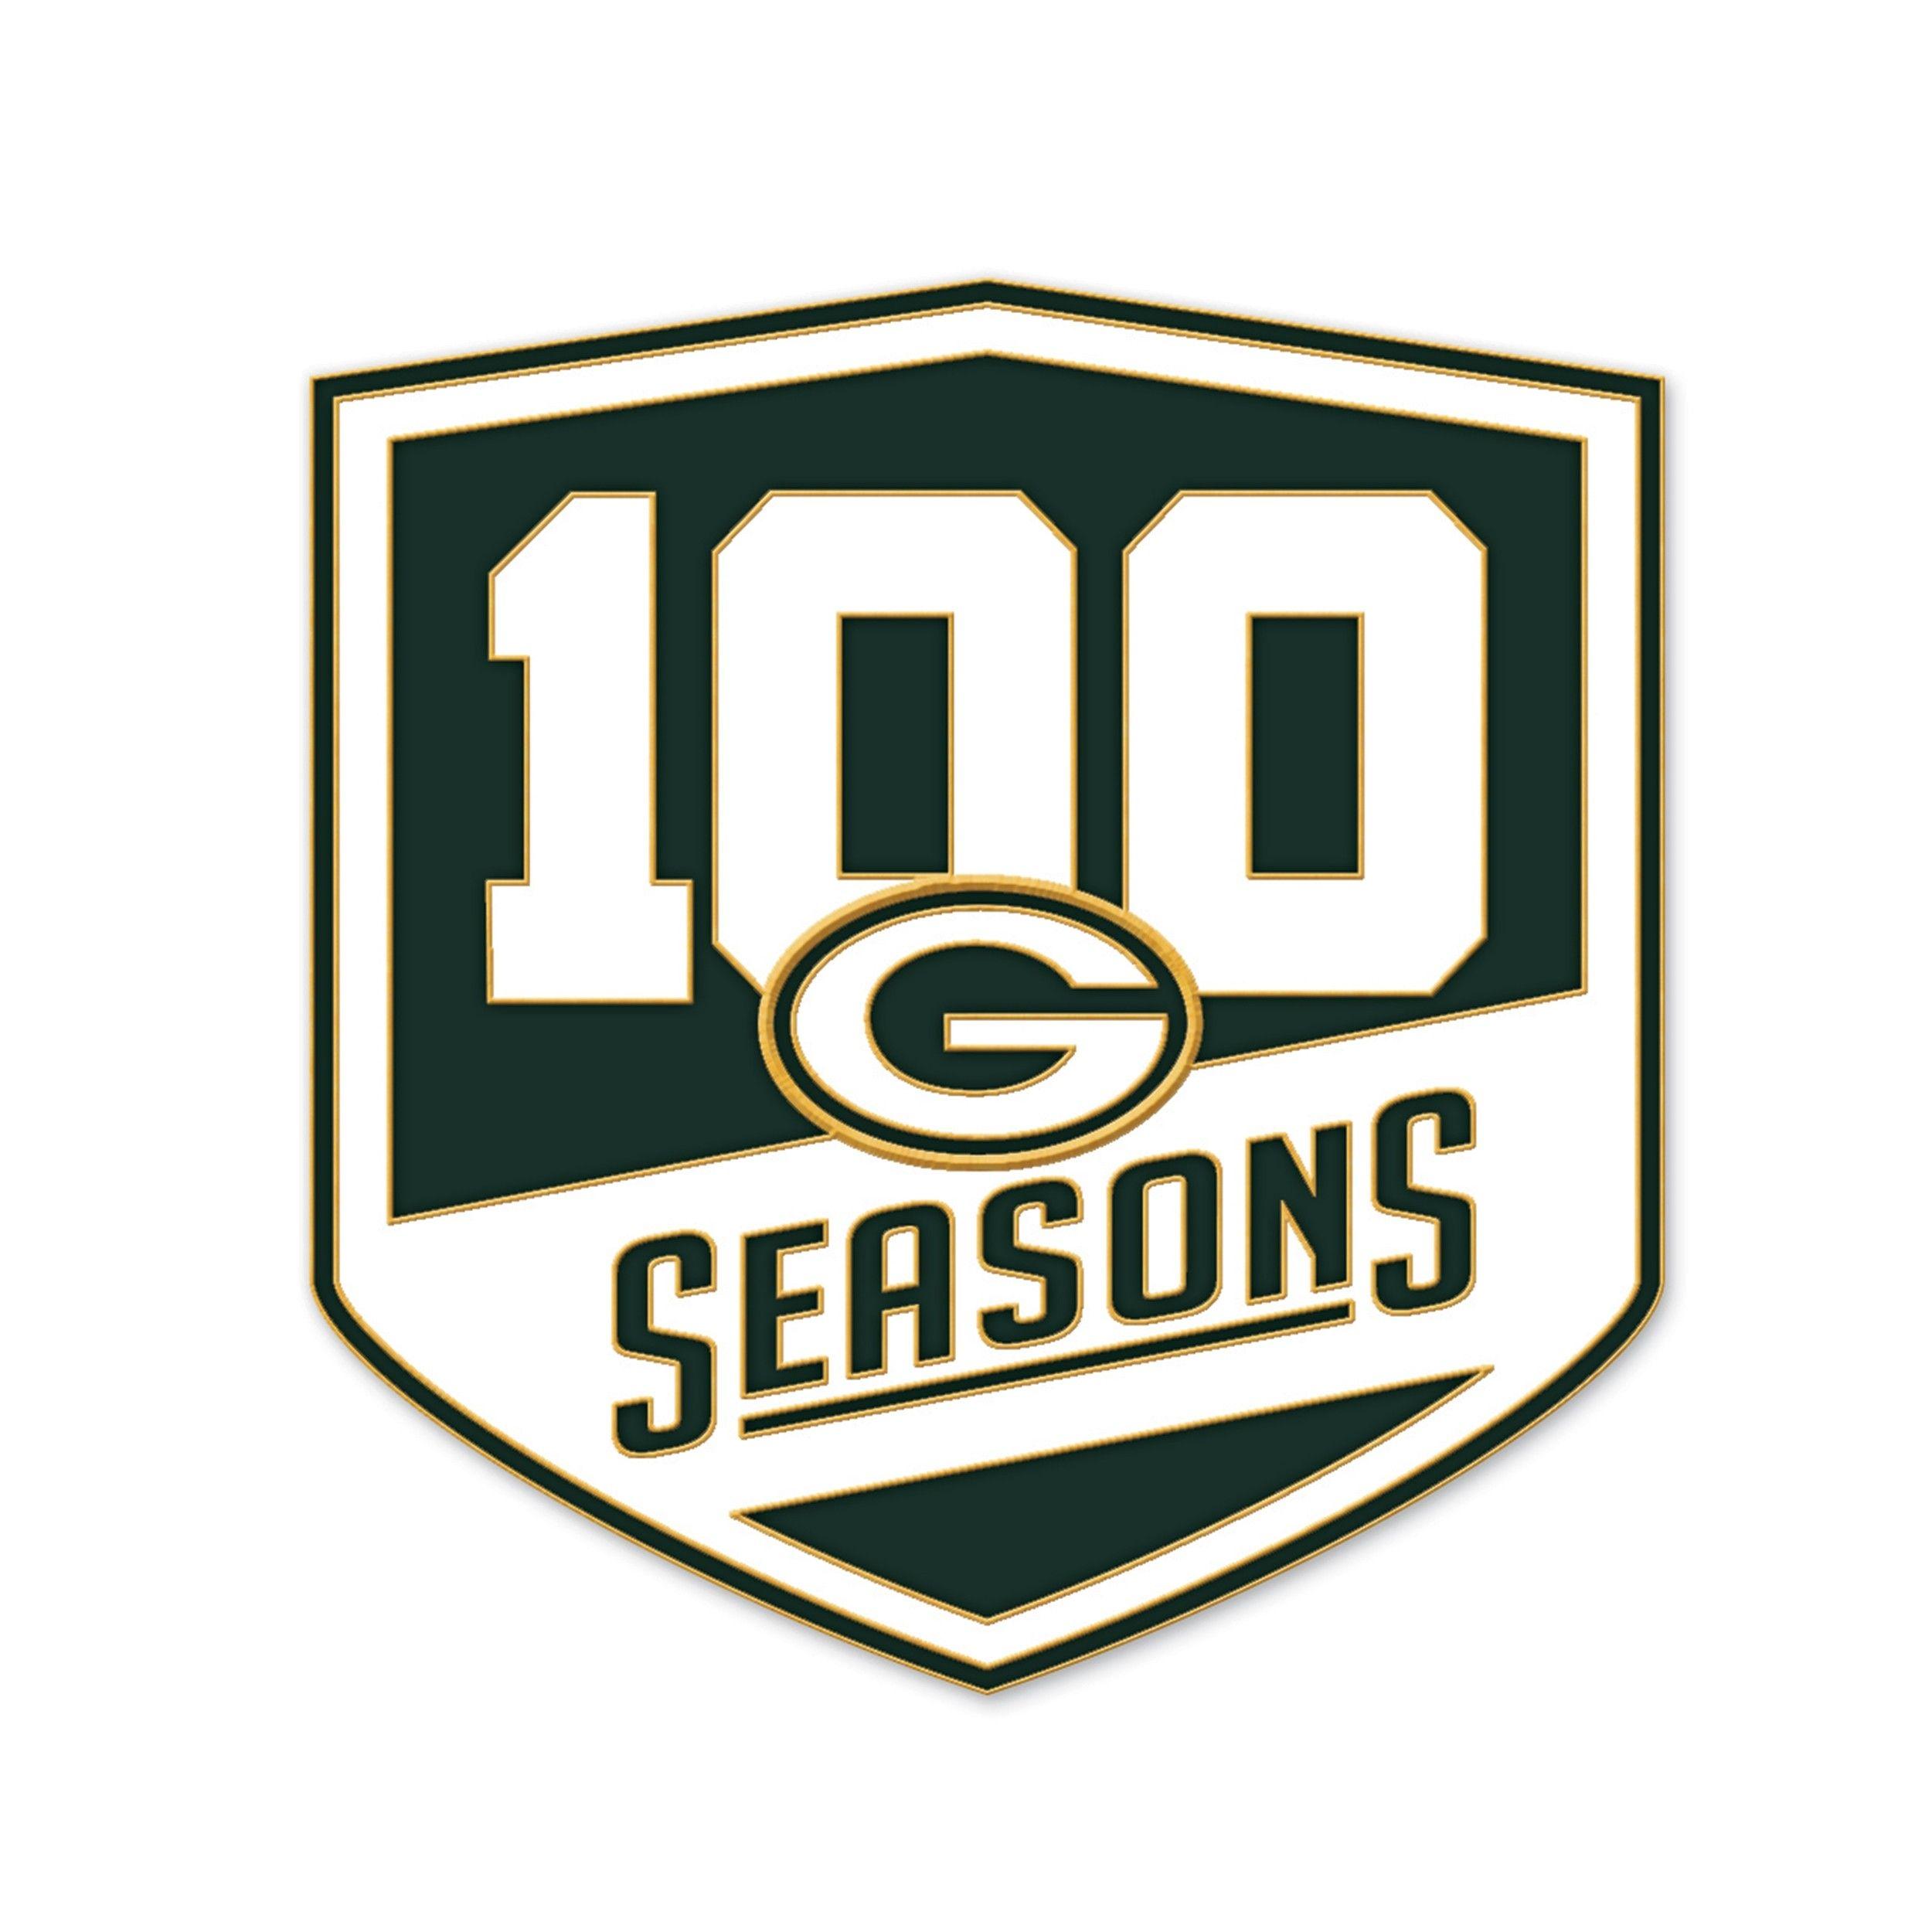 Packers Logo - Green Bay Packers 100 Seasons Logo Pin at the Packers Pro Shop